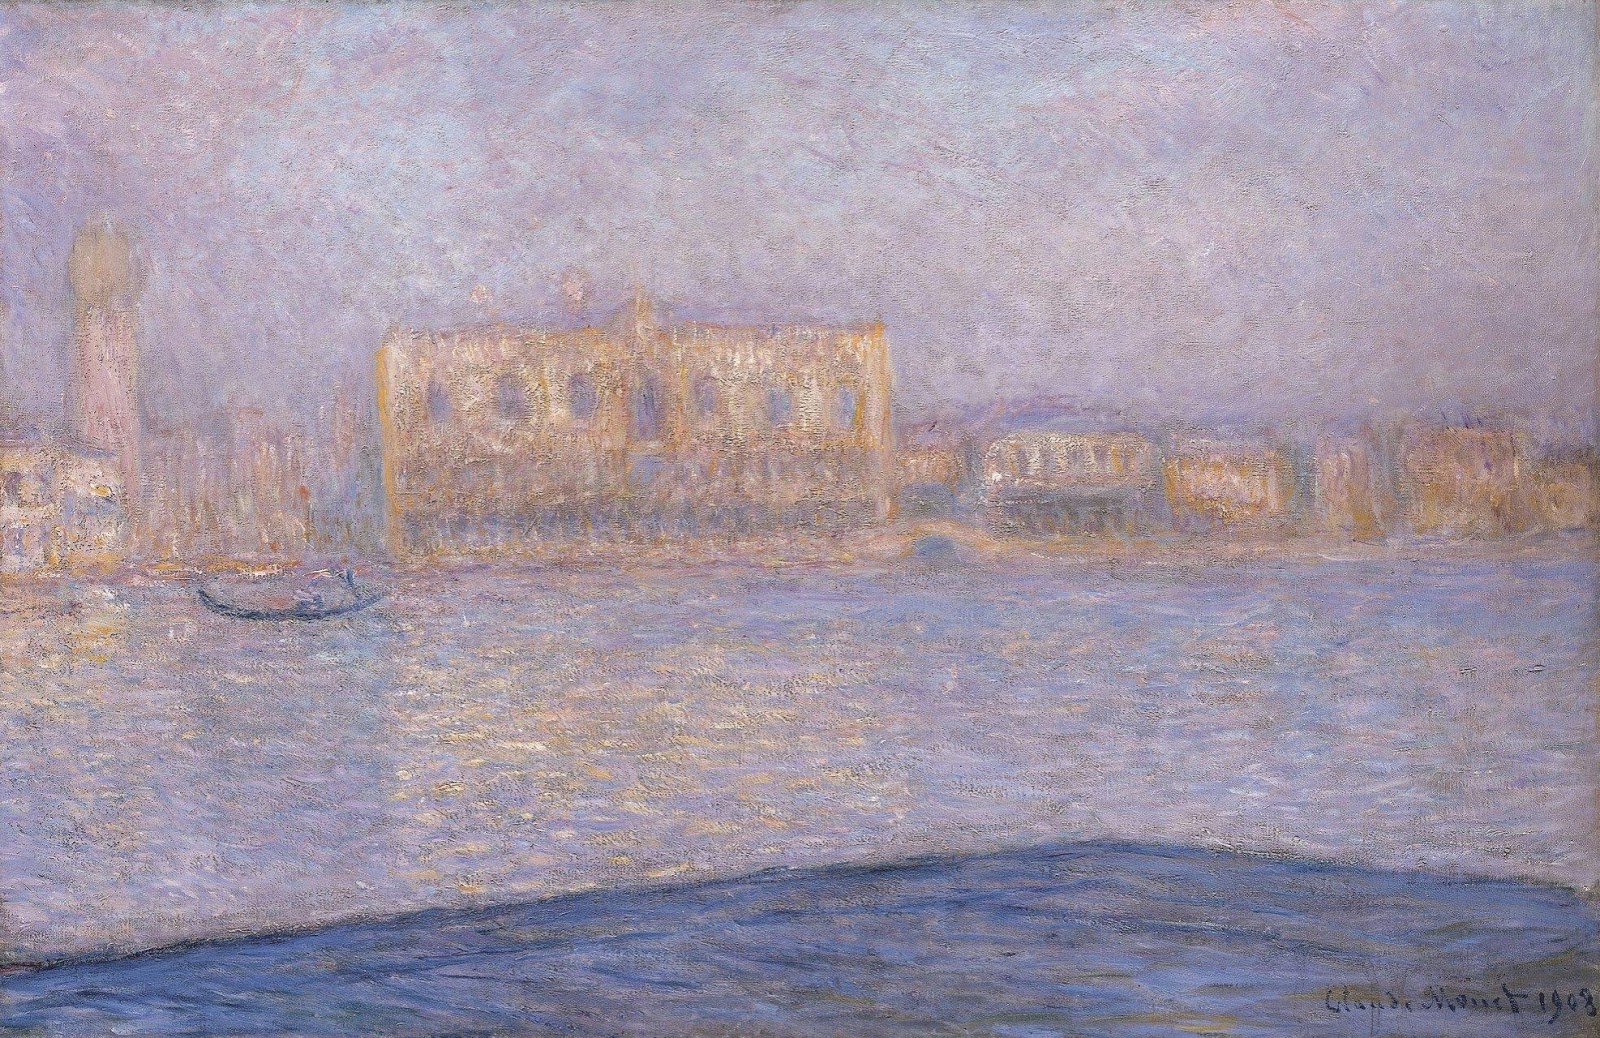 Claude+Monet-1840-1926 (448).jpg